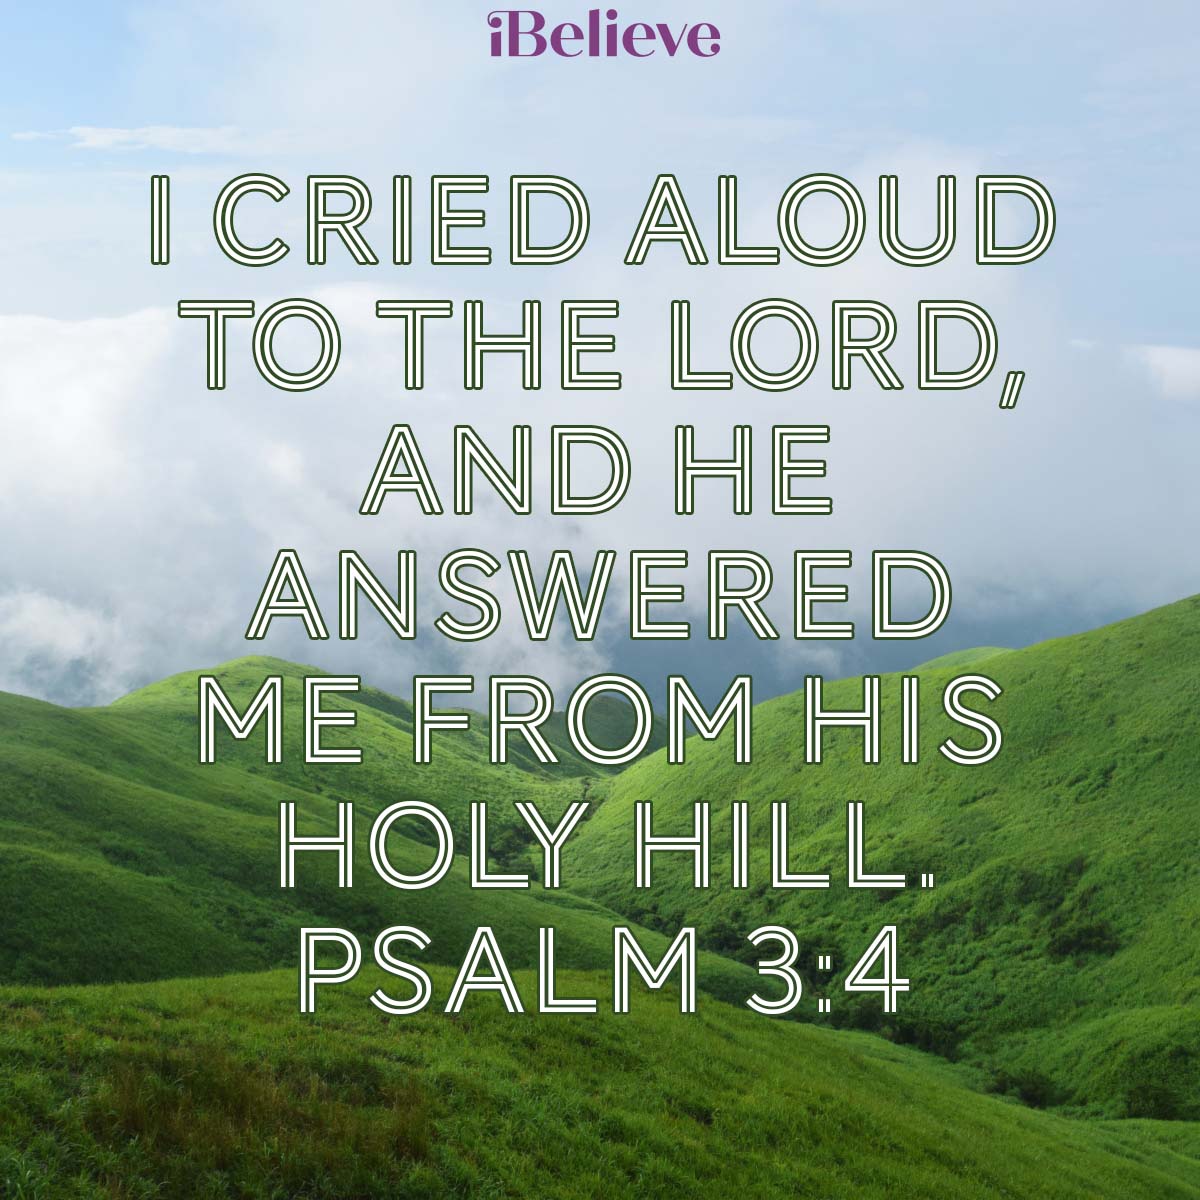 Psalm 3:4, inspirational image